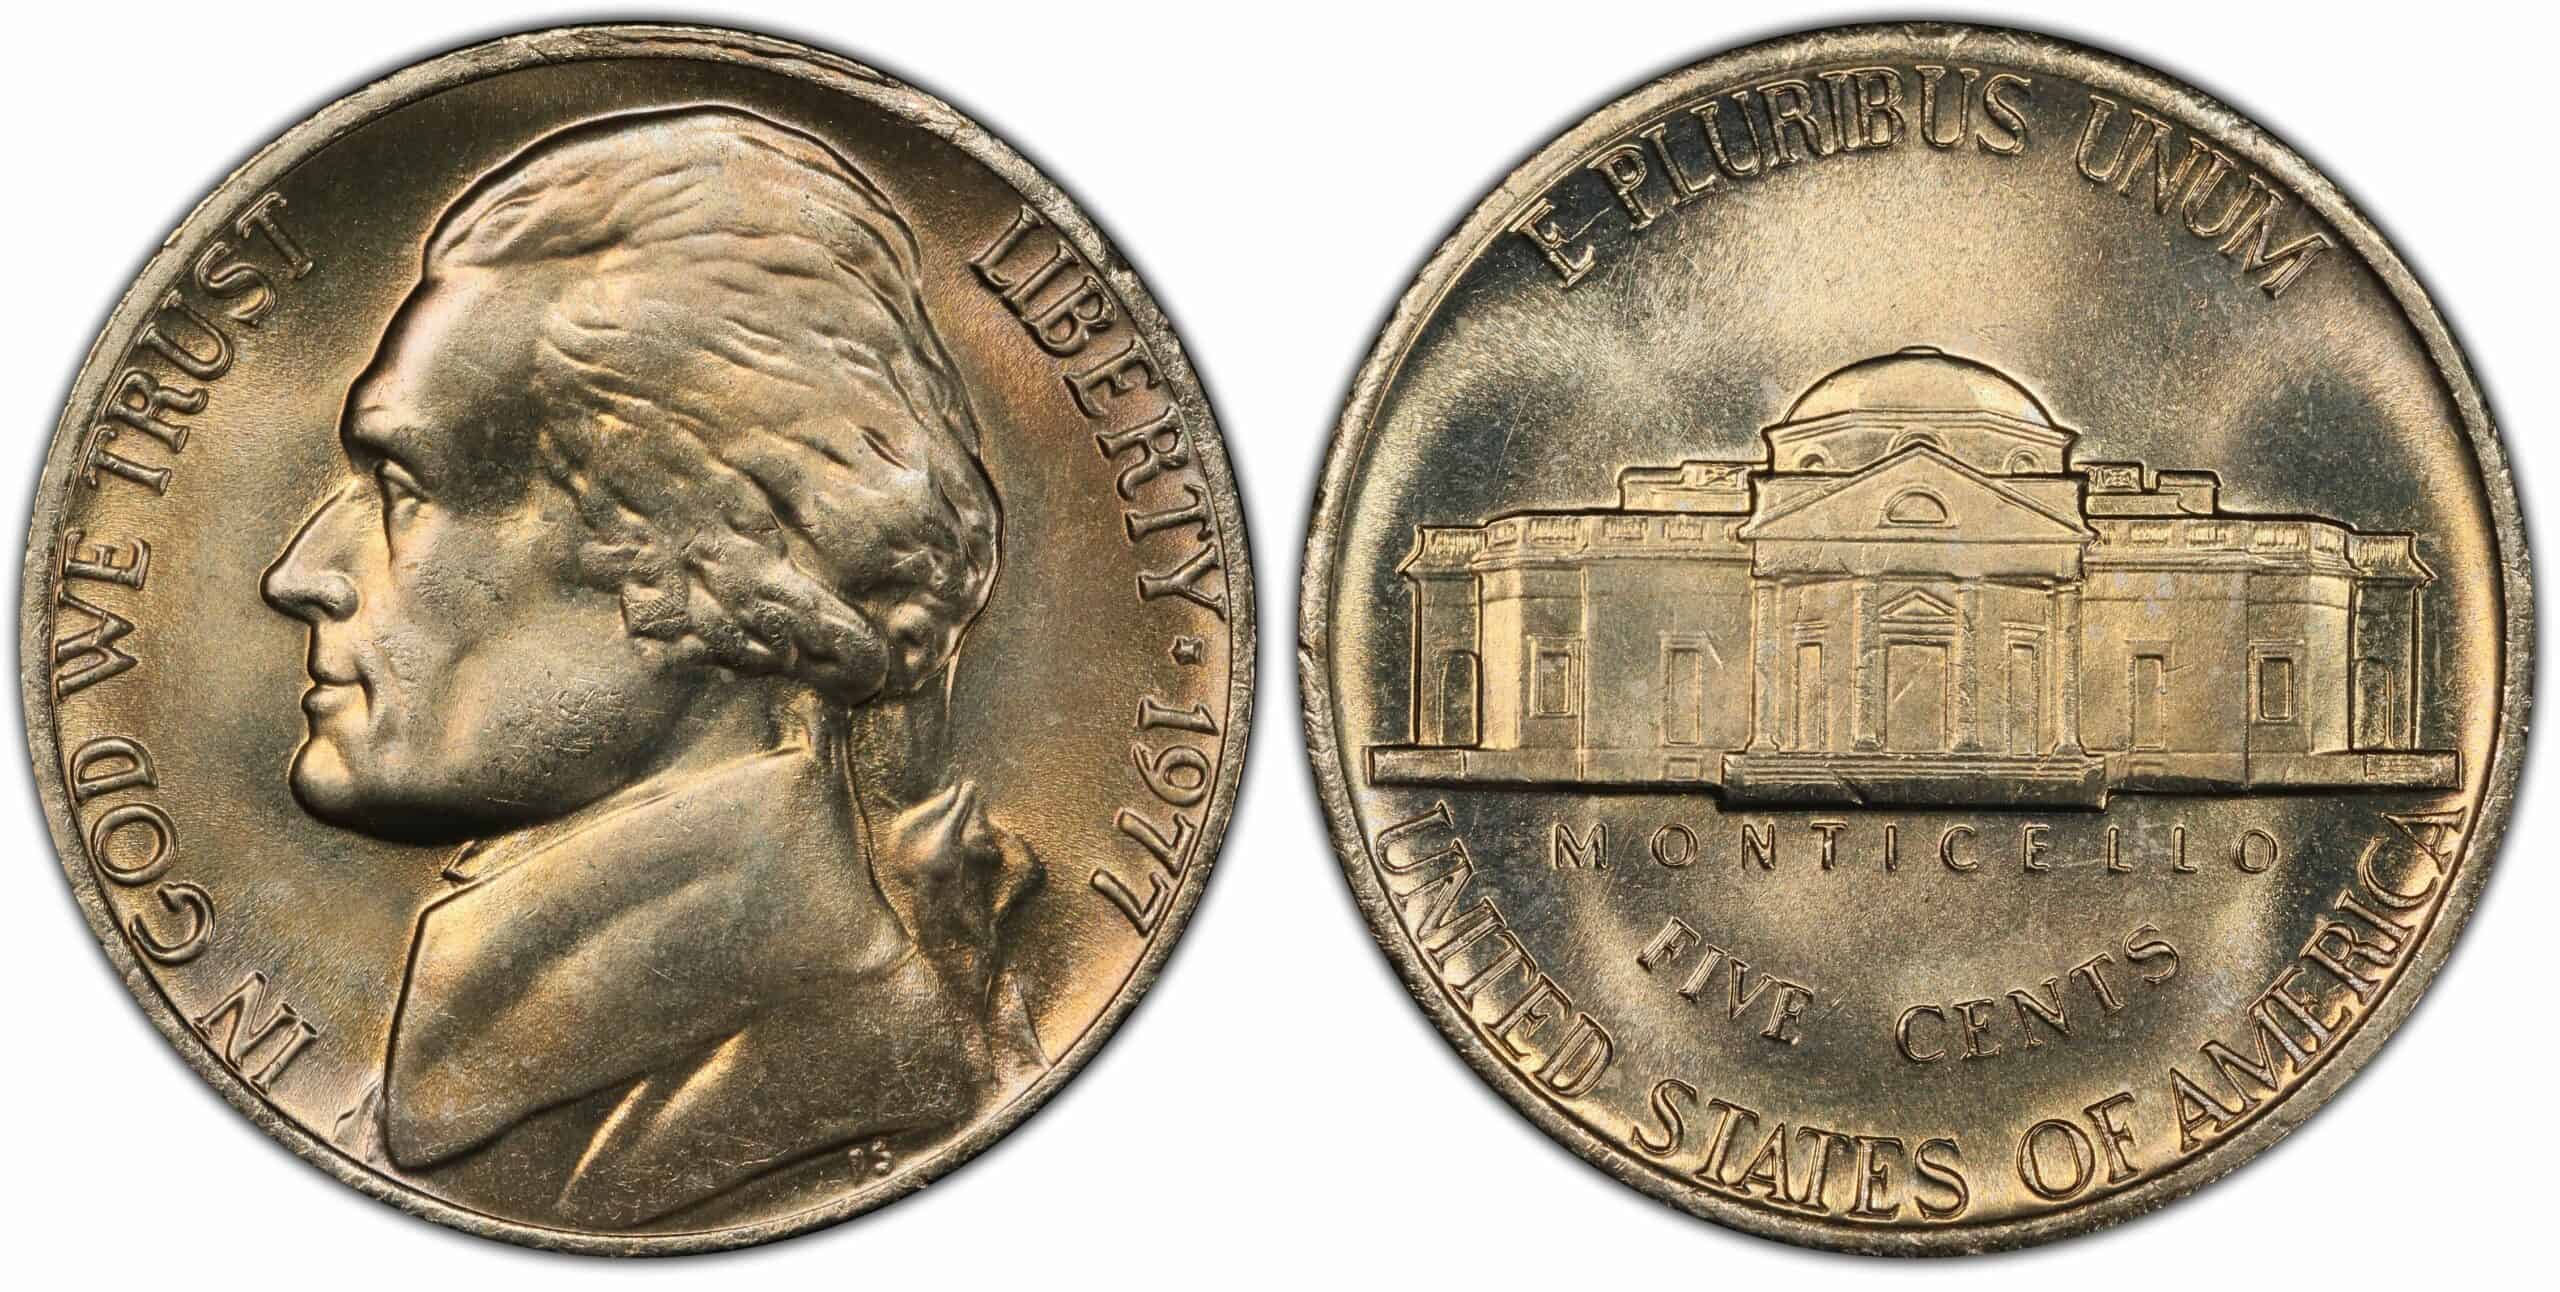 1977 Nickel Coin